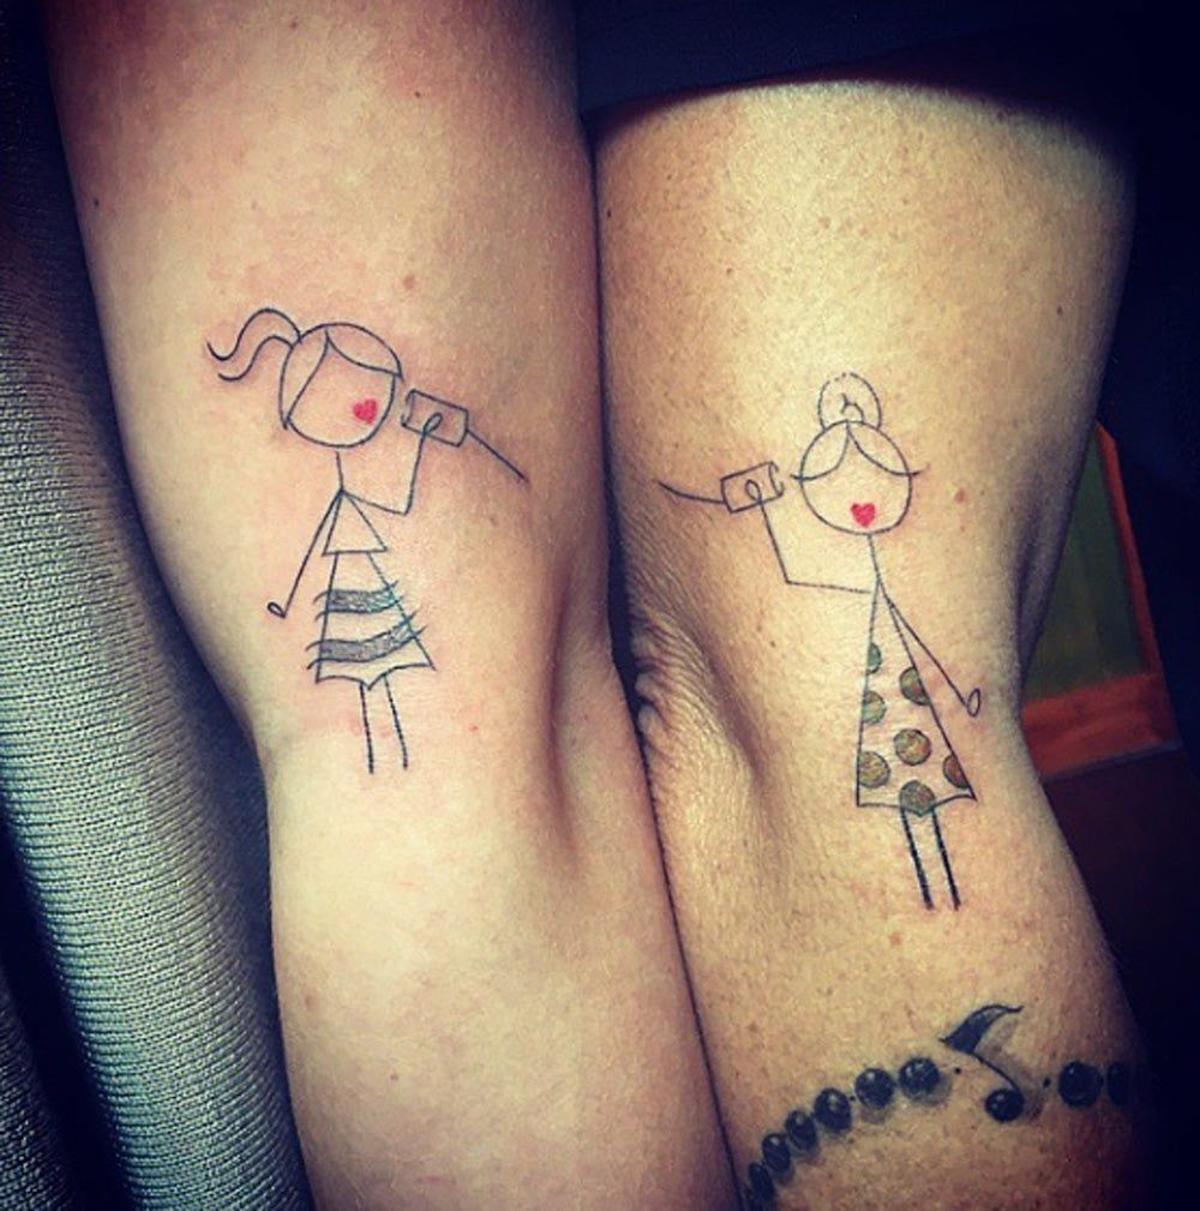 Tatuajes con mamá: dibujo